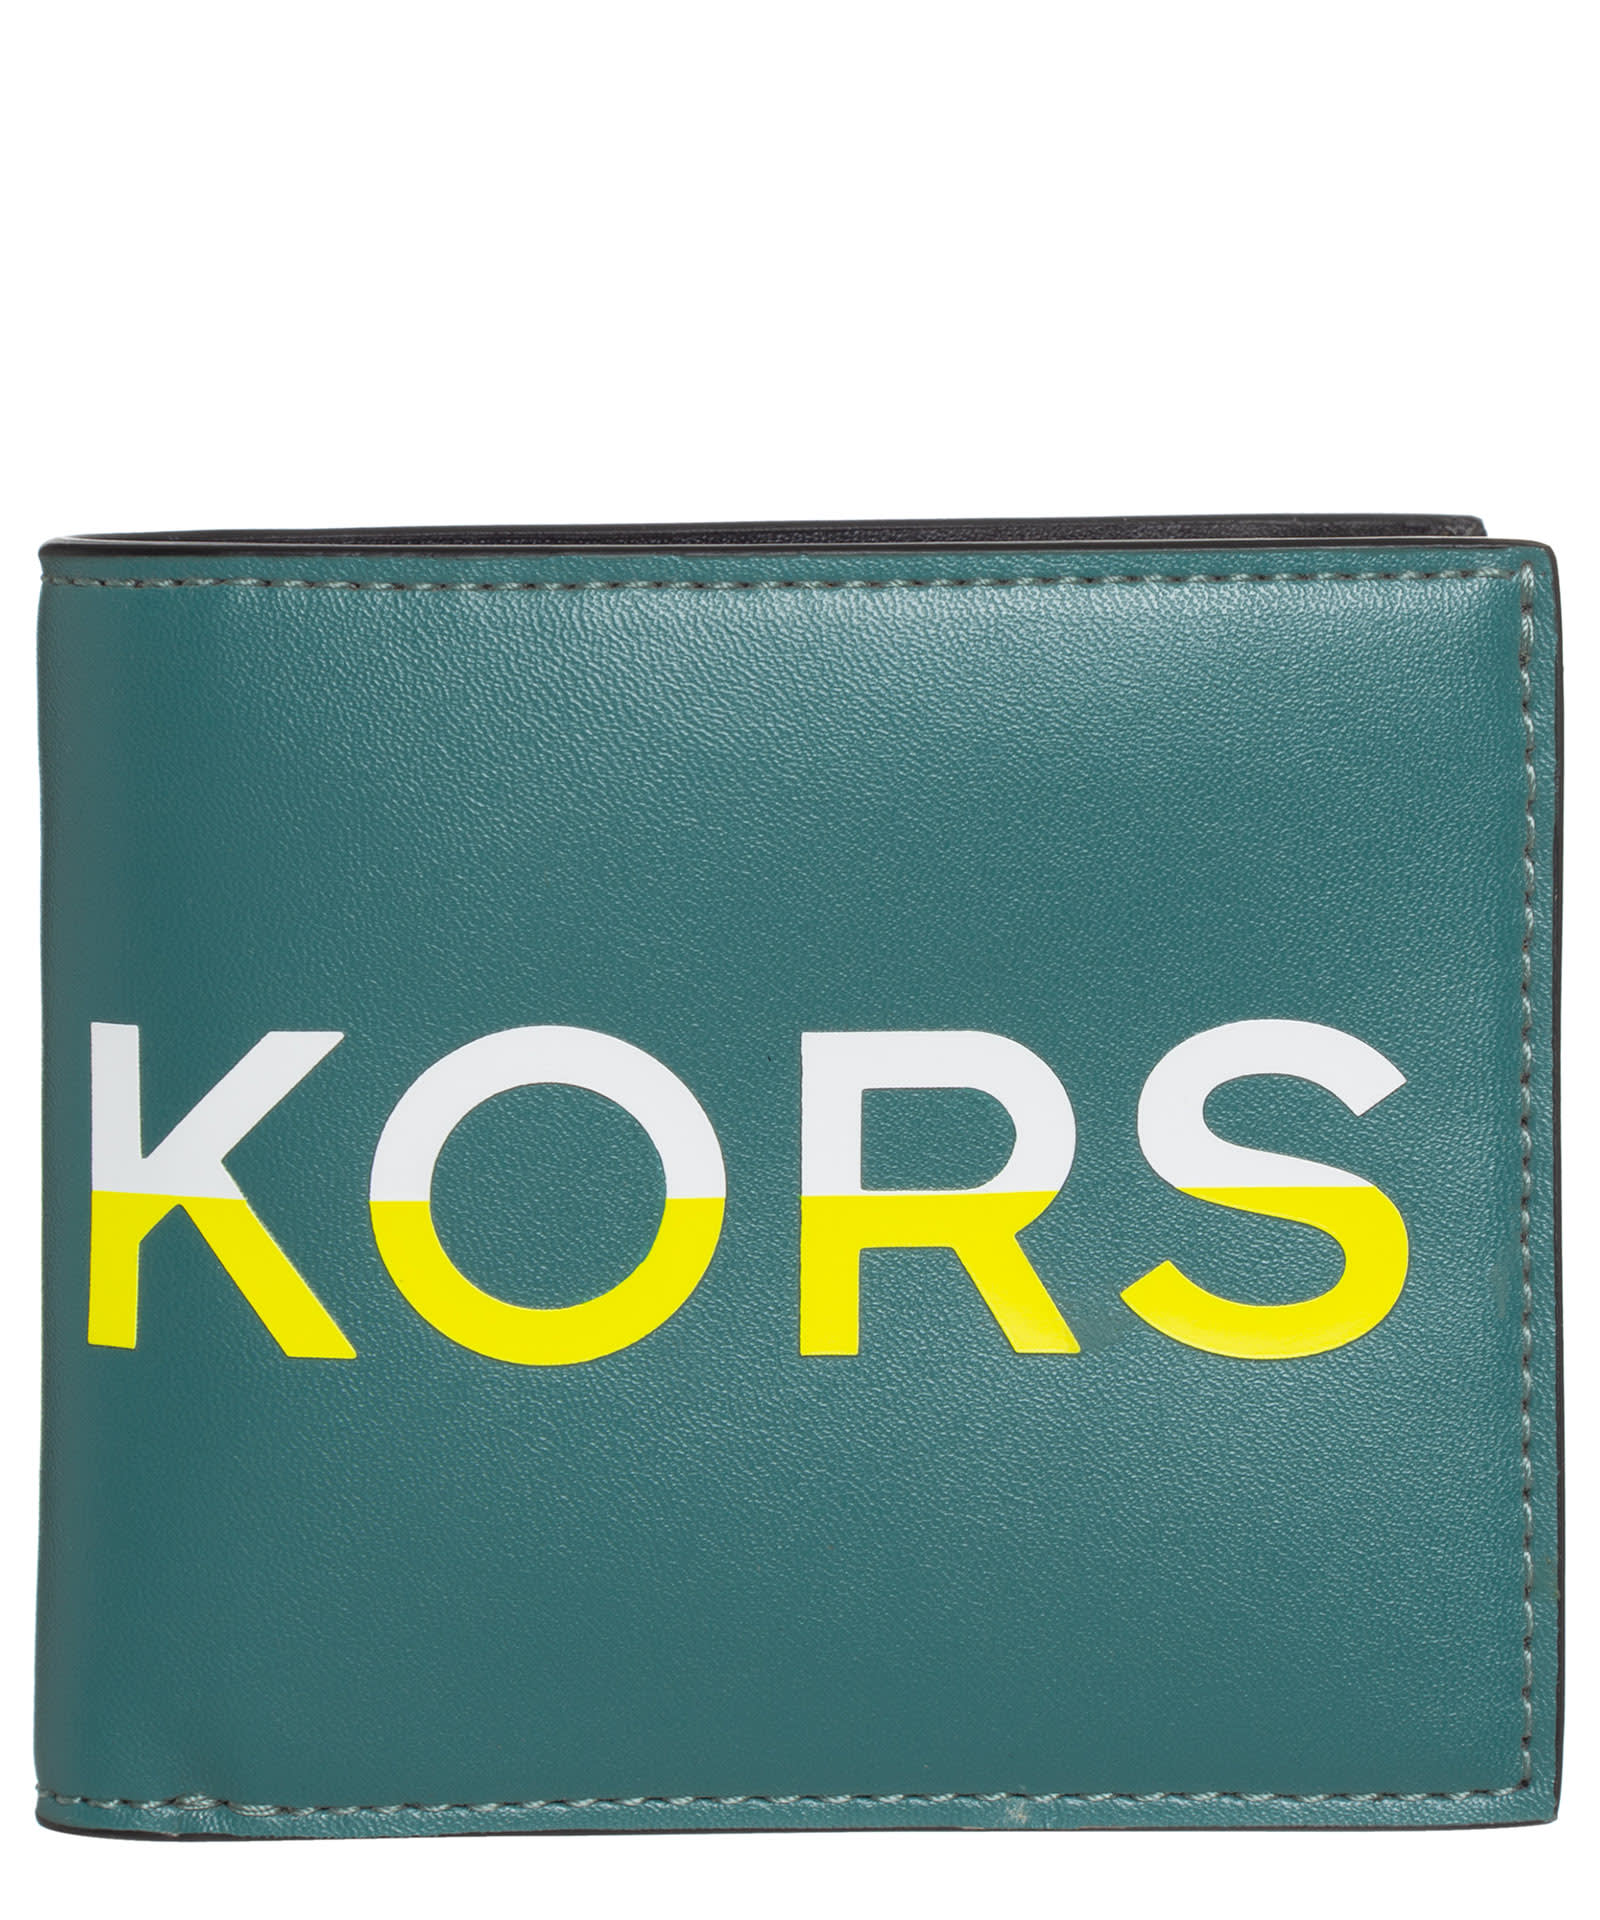 Michael Kors Greyson Leather Wallet